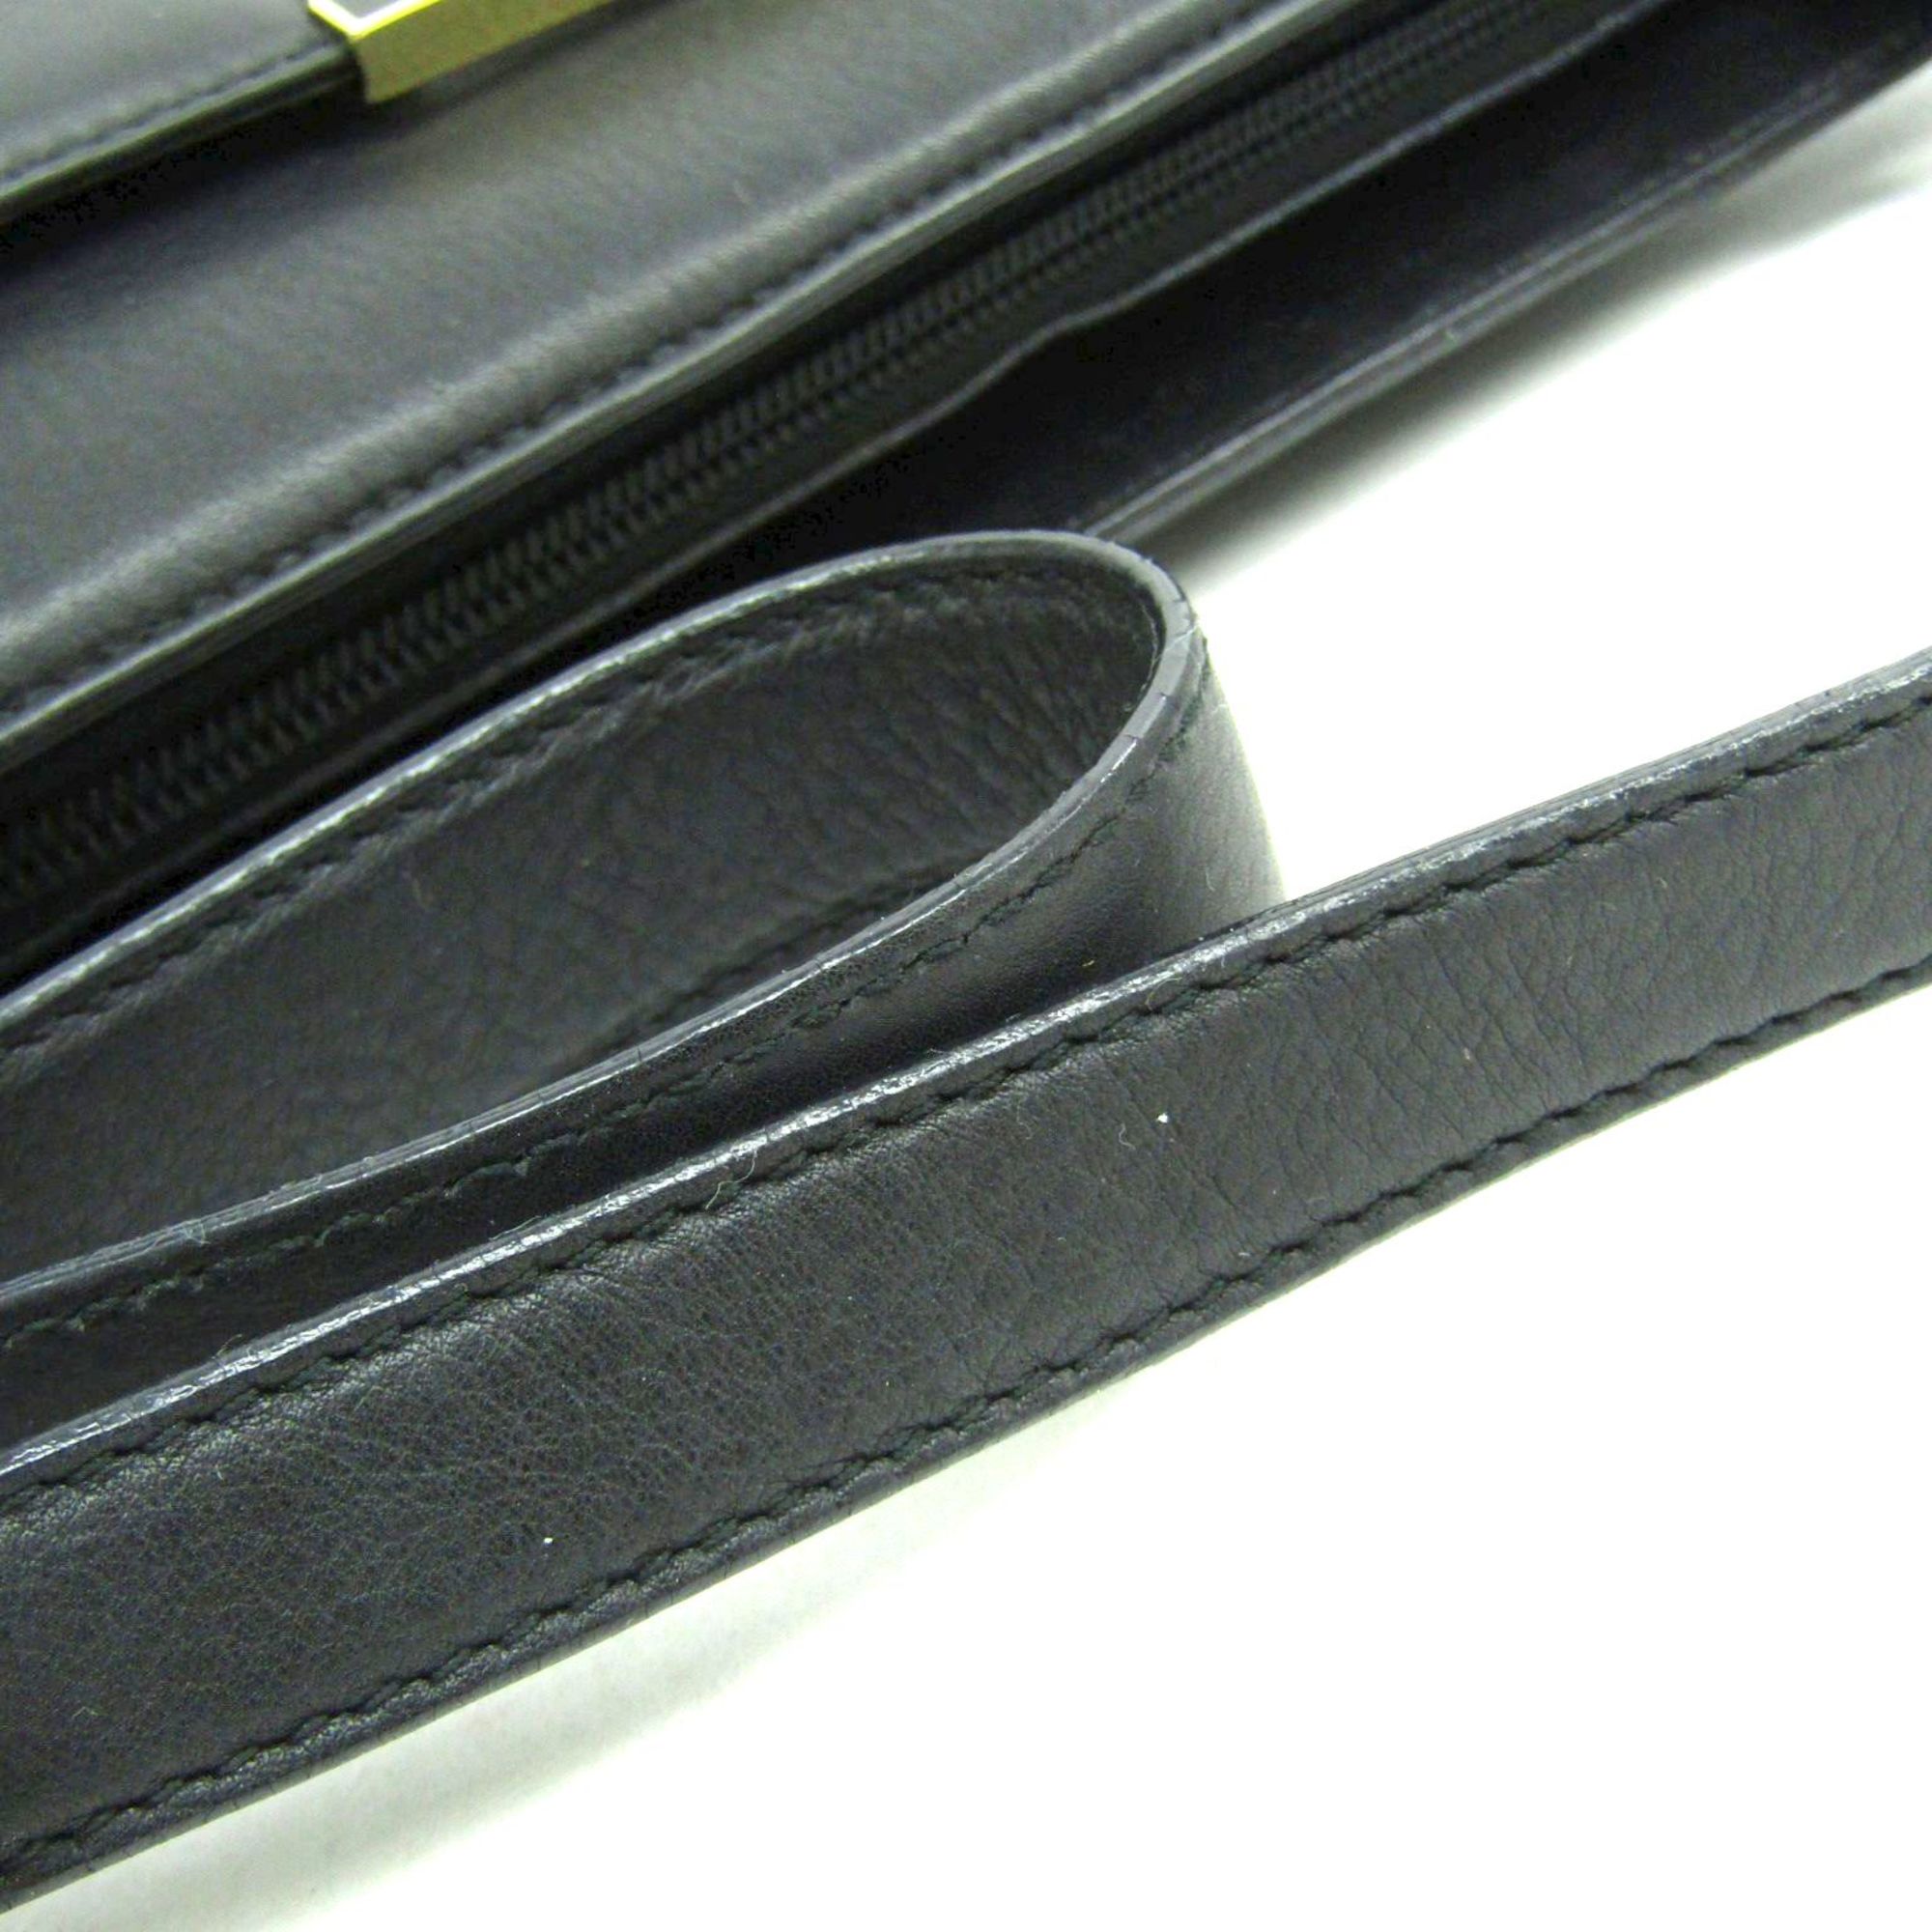 Salvatore Ferragamo Shoulder Bag Calfskin Black/Gold BZ-21 8240